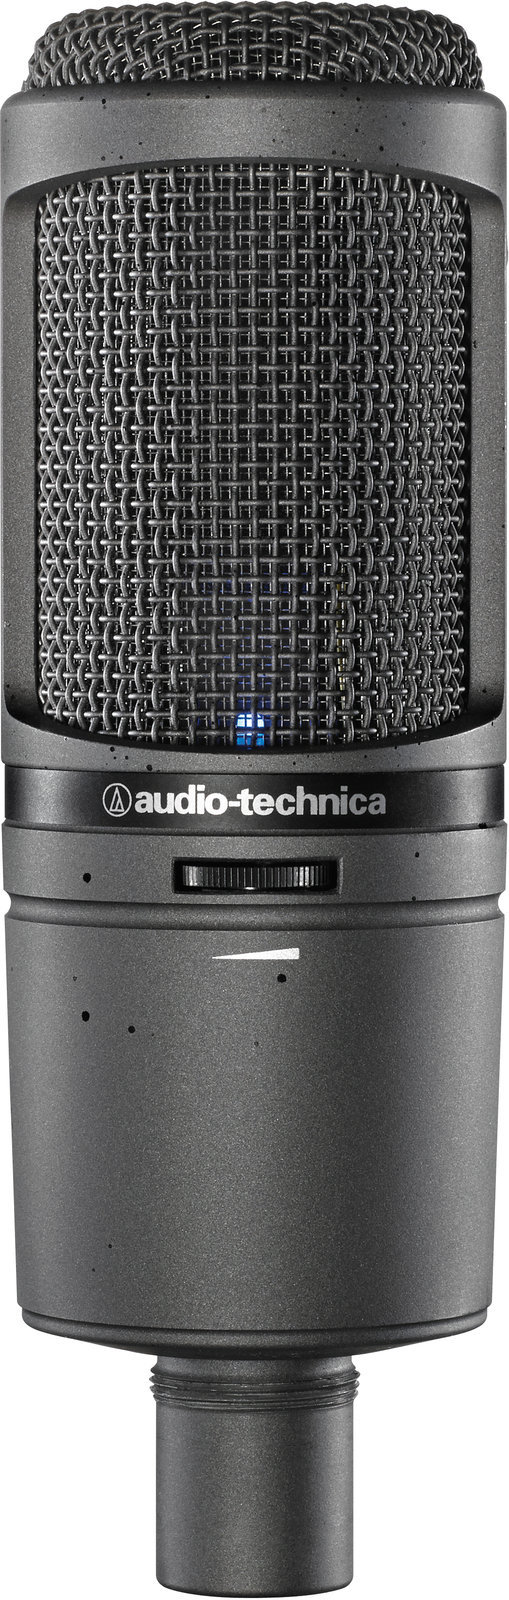 USB-mikrofon Audio-Technica AT2020USBi